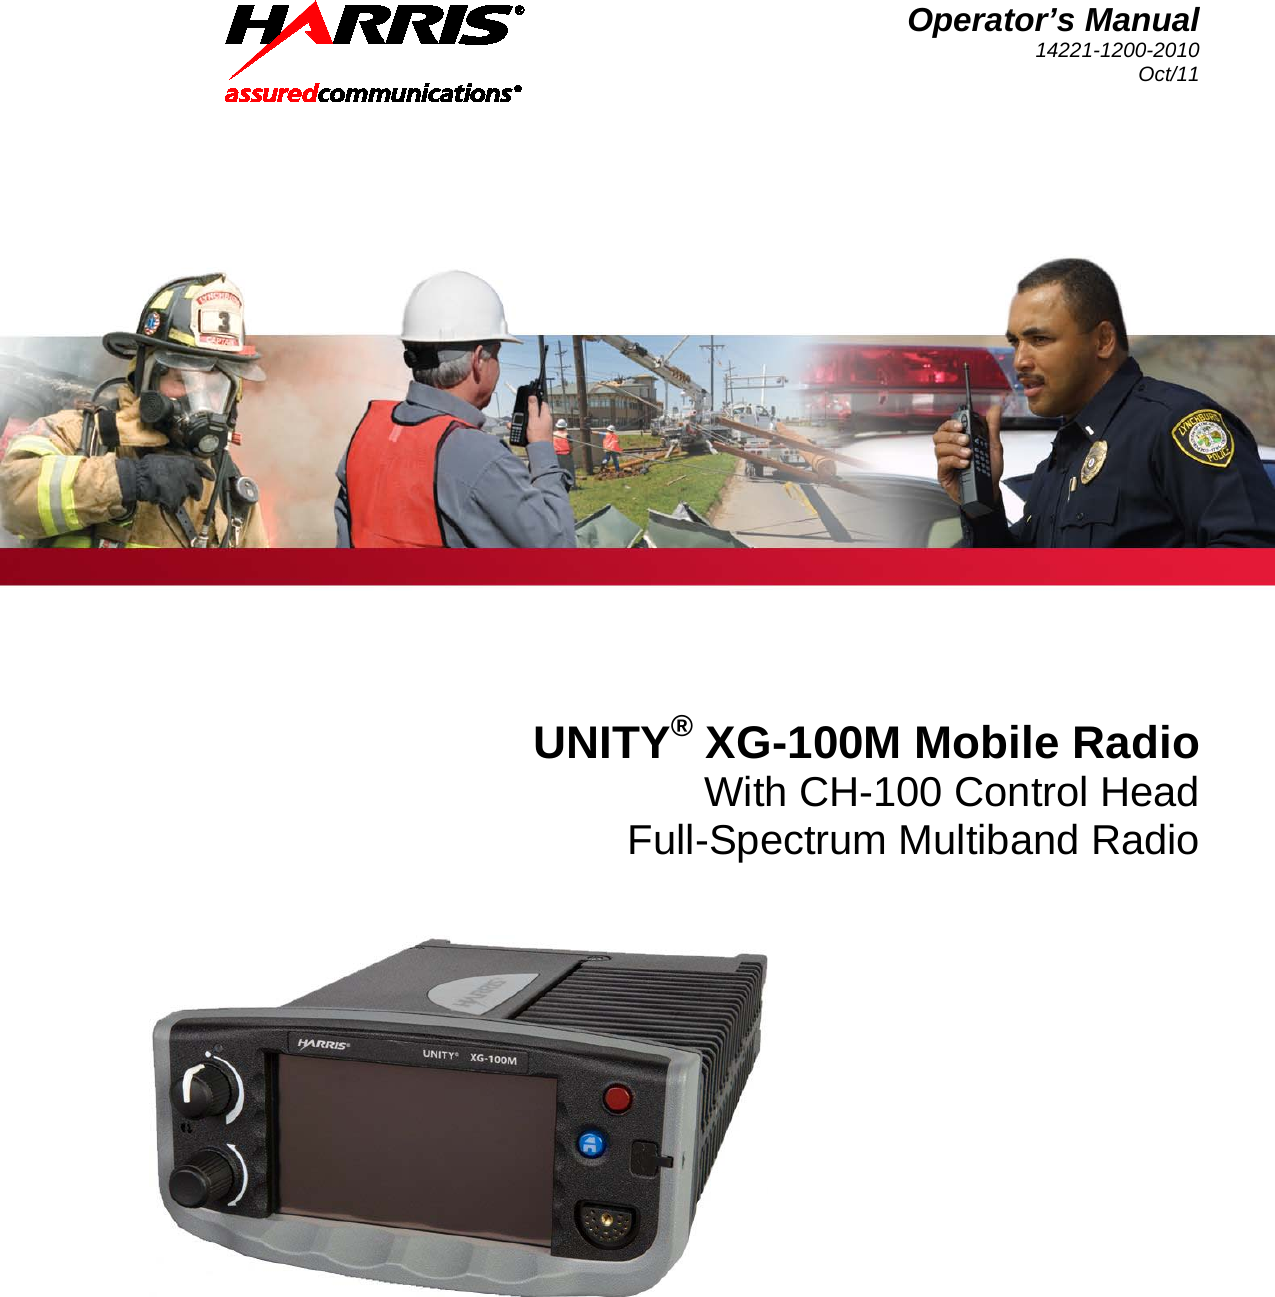 Operator’s Manual 14221-1200-2010 Oct/11    UNITY® XG-100M Mobile Radio With CH-100 Control Head Full-Spectrum Multiband Radio     